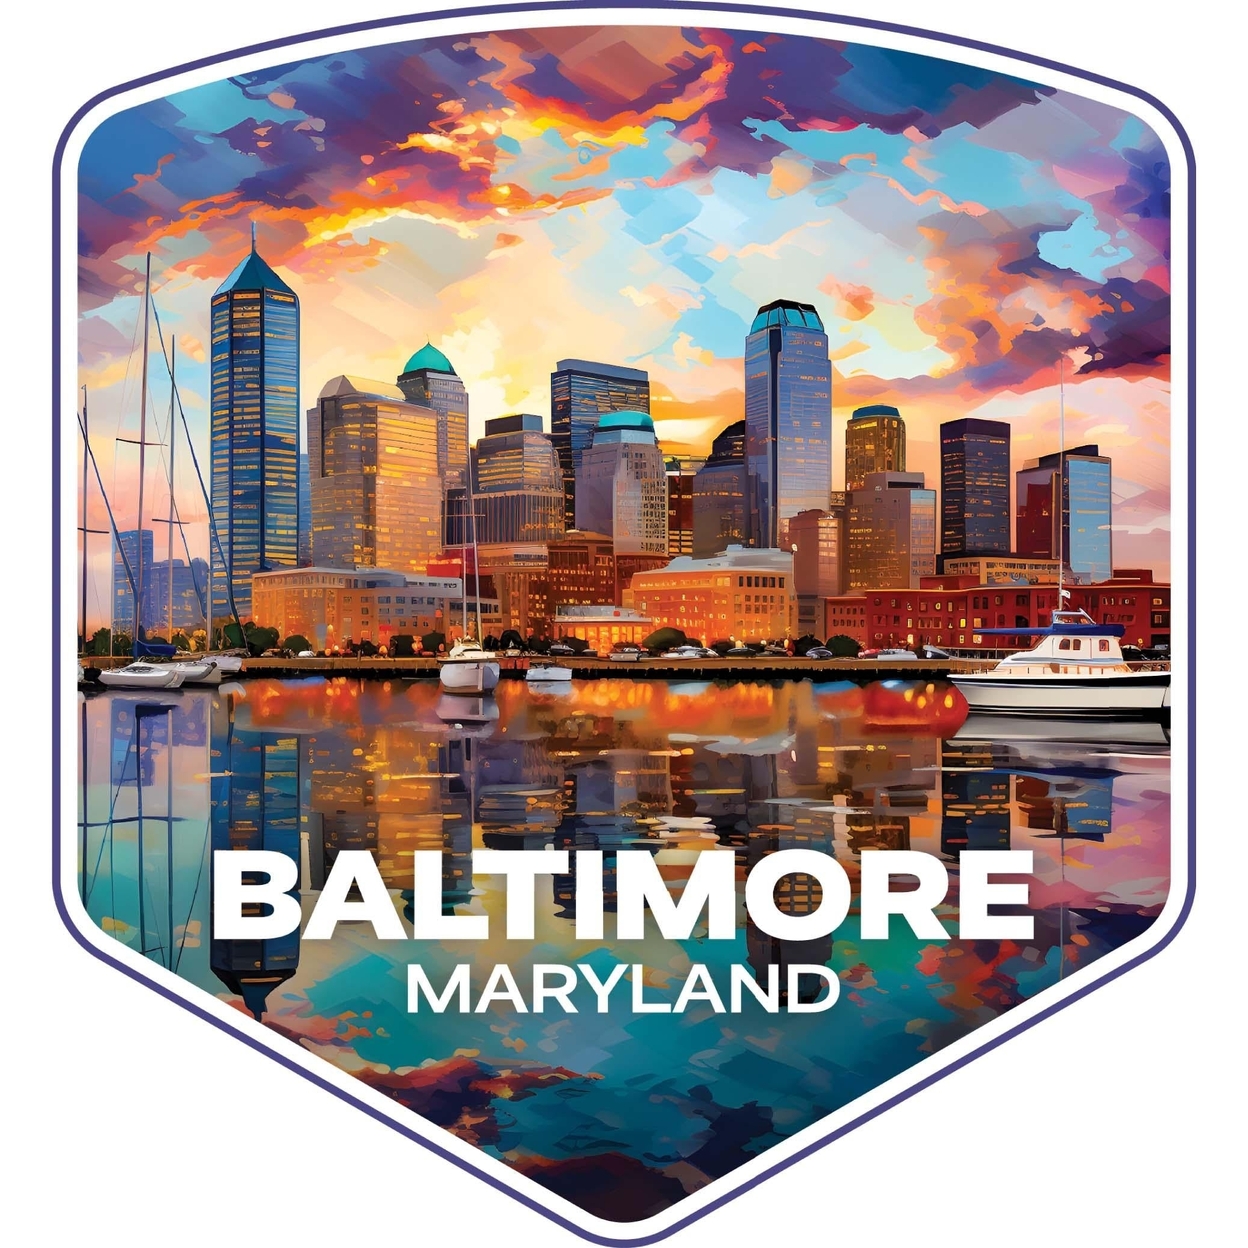 Baltimore Maryland A Souvenir Vinyl Decal Sticker - 4-Inch